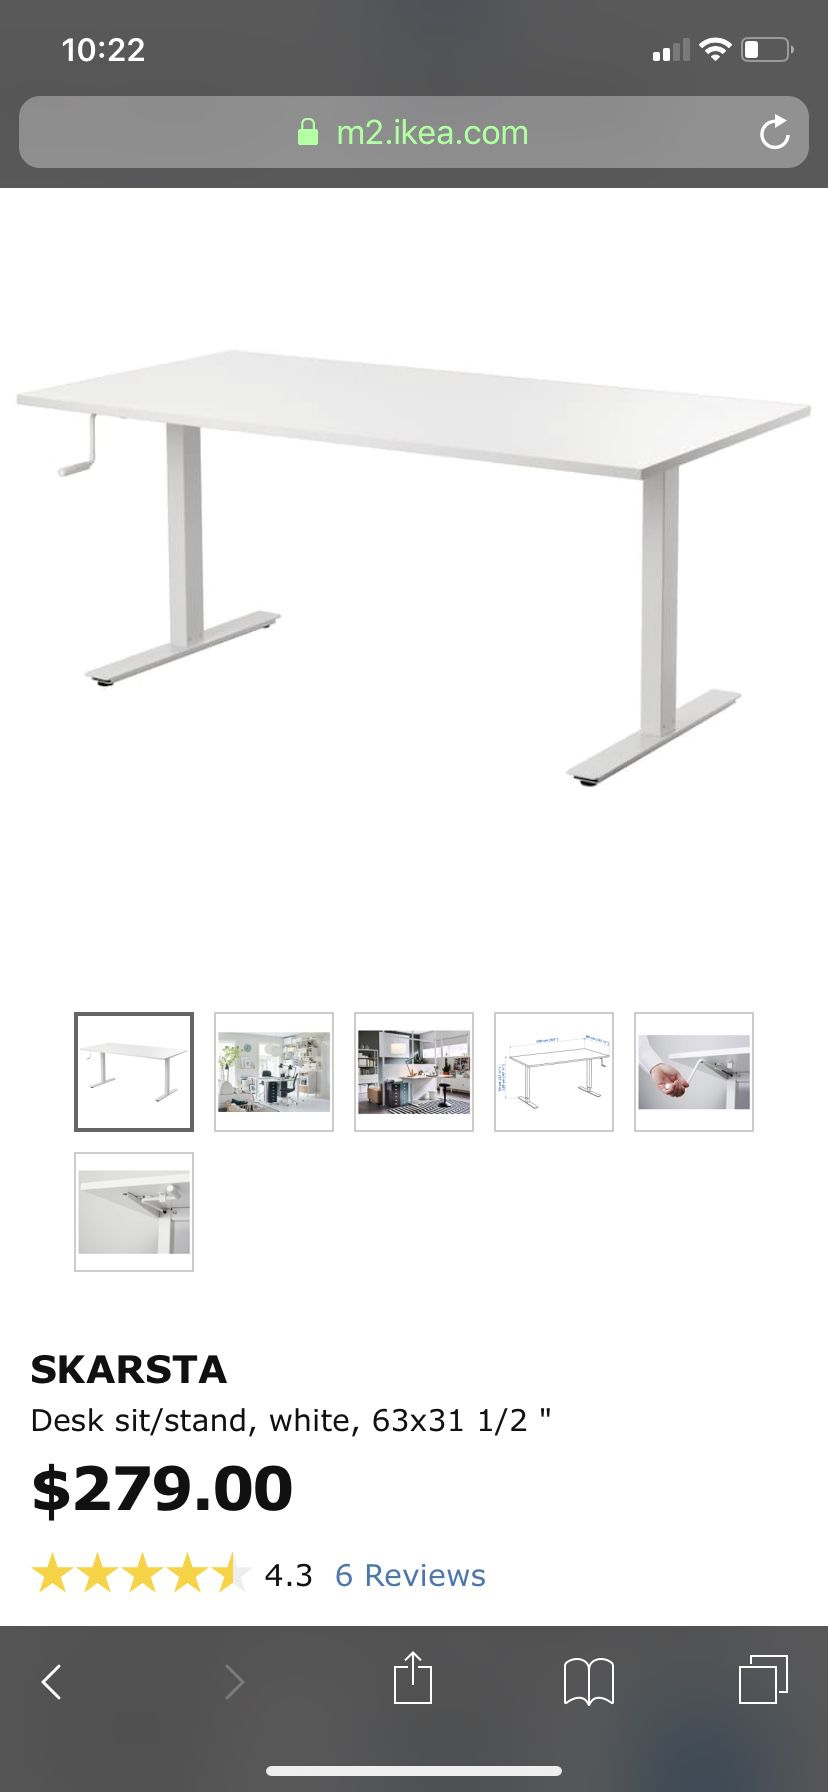 Skarsta - IKEA sit/stand desk